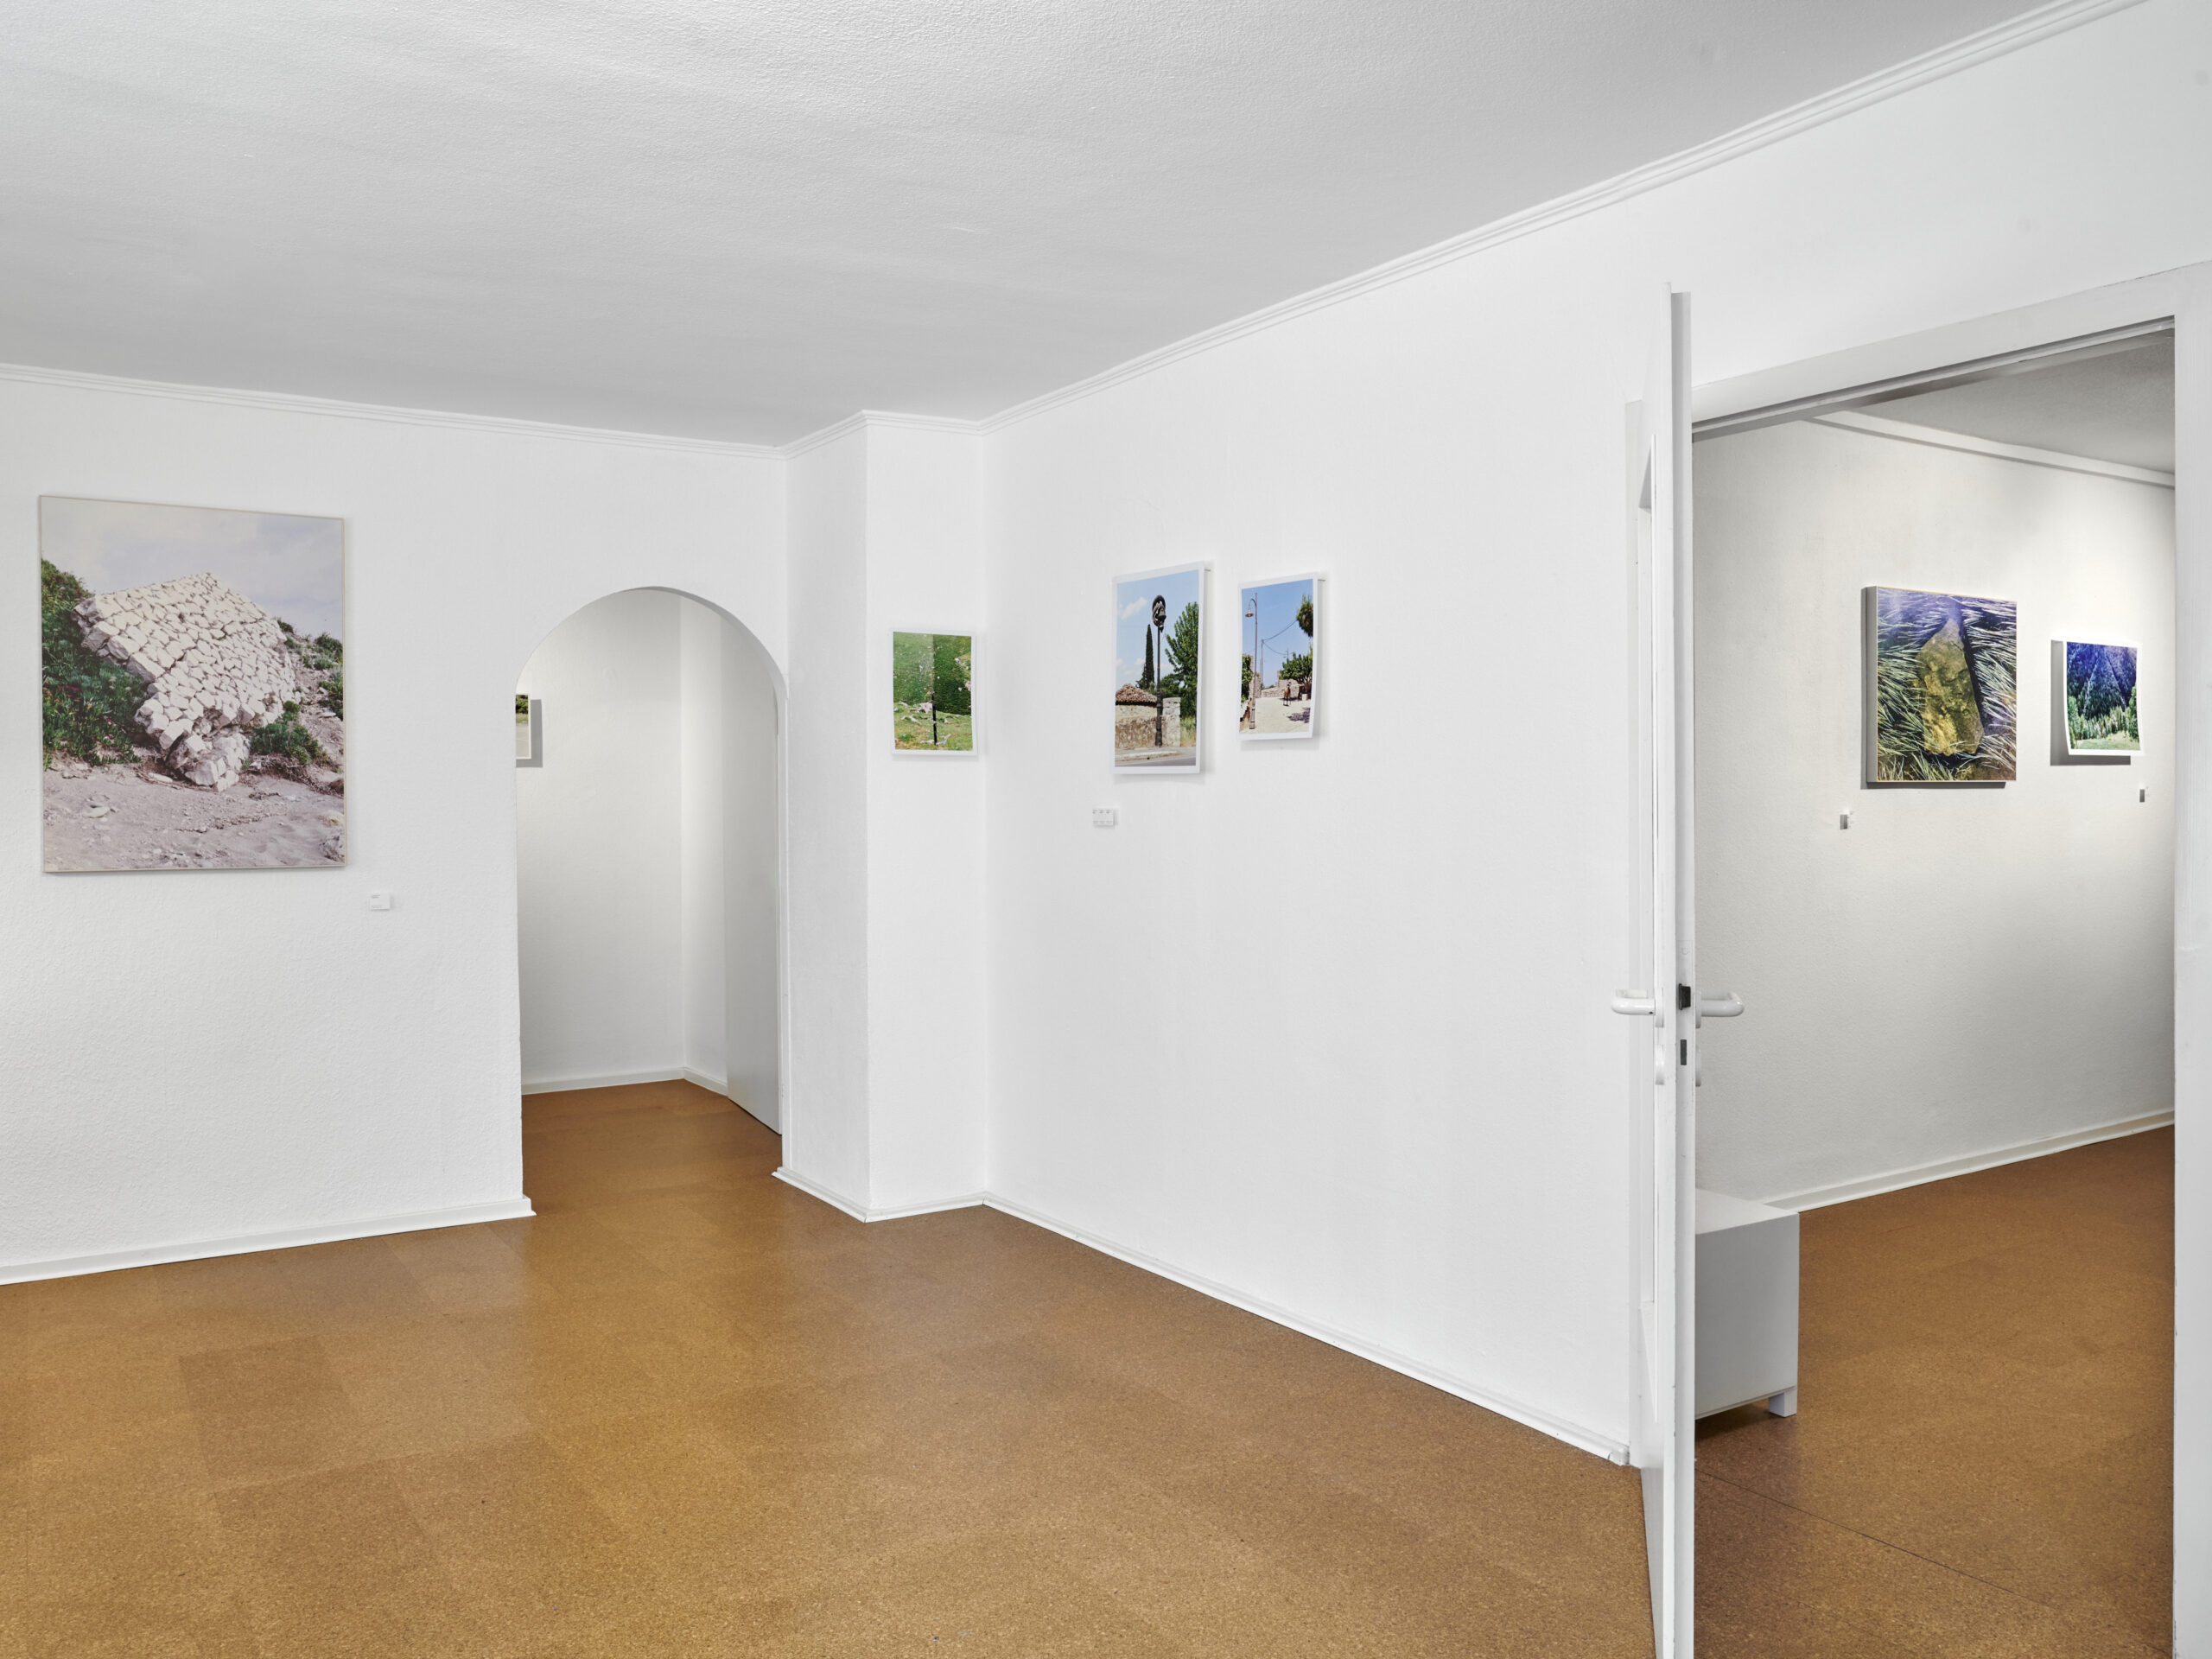 Einzelausstellung | RfO | Stuttgart | Ausstellungsansicht